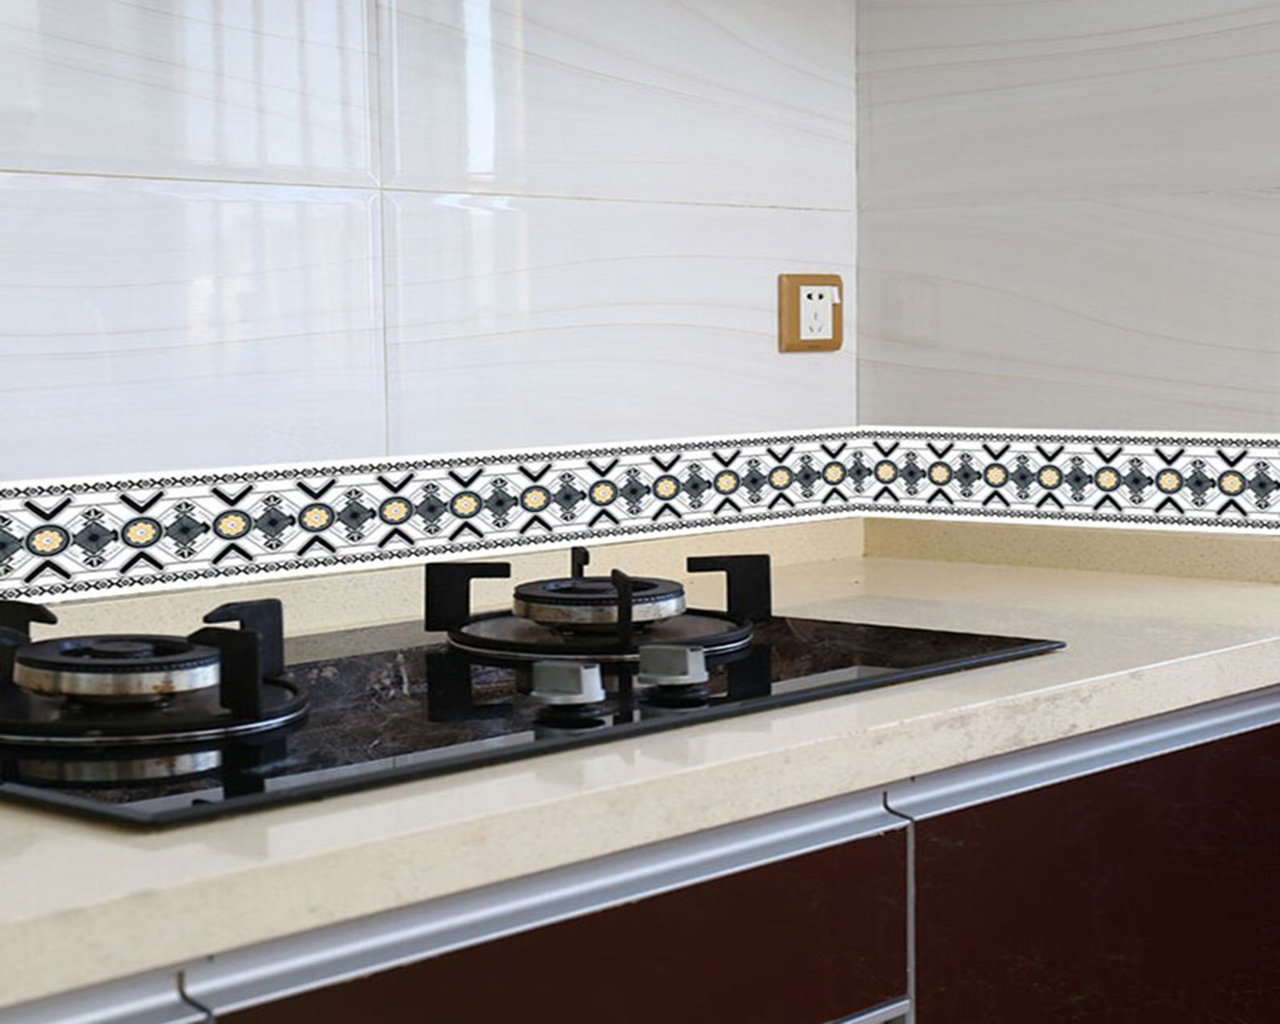 kitchen tiles design catalogue india